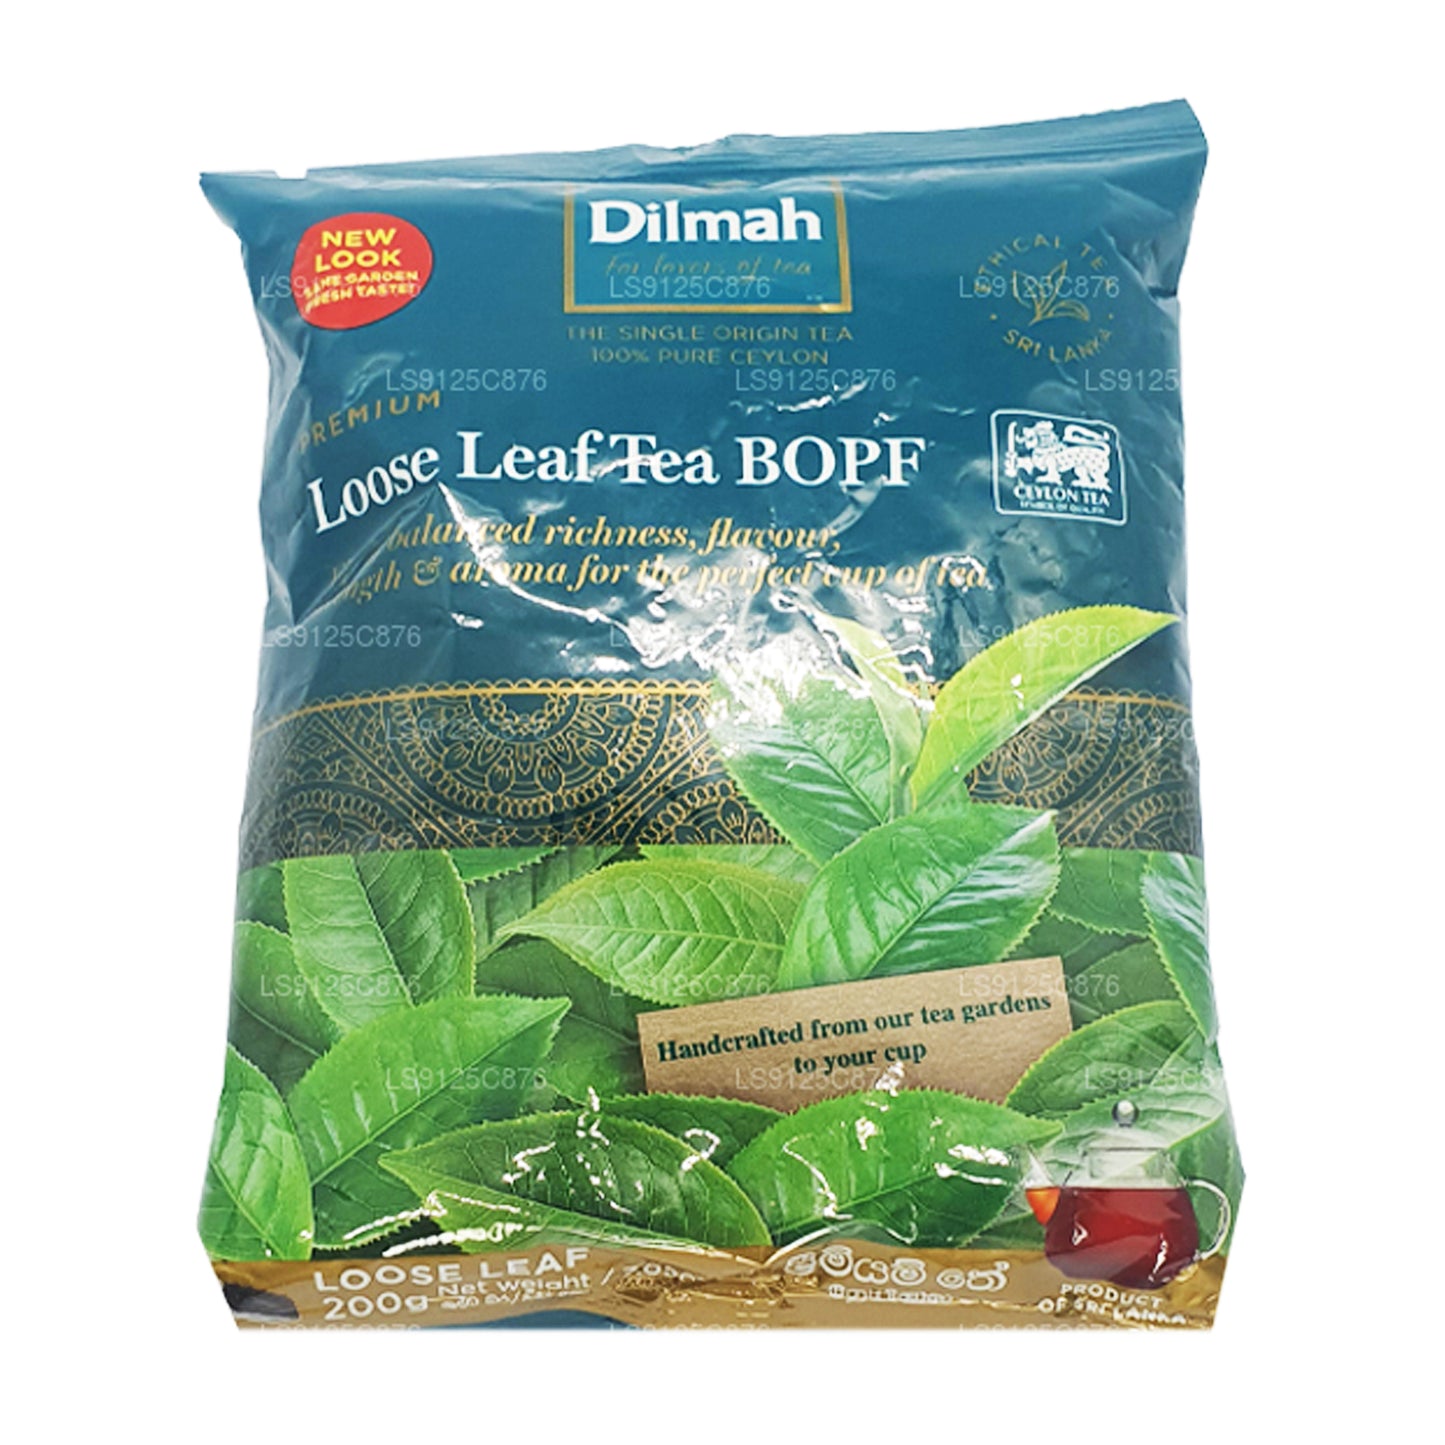 Dilmah Premium Ceylon Losbladige zwarte thee BOPF (200 g)